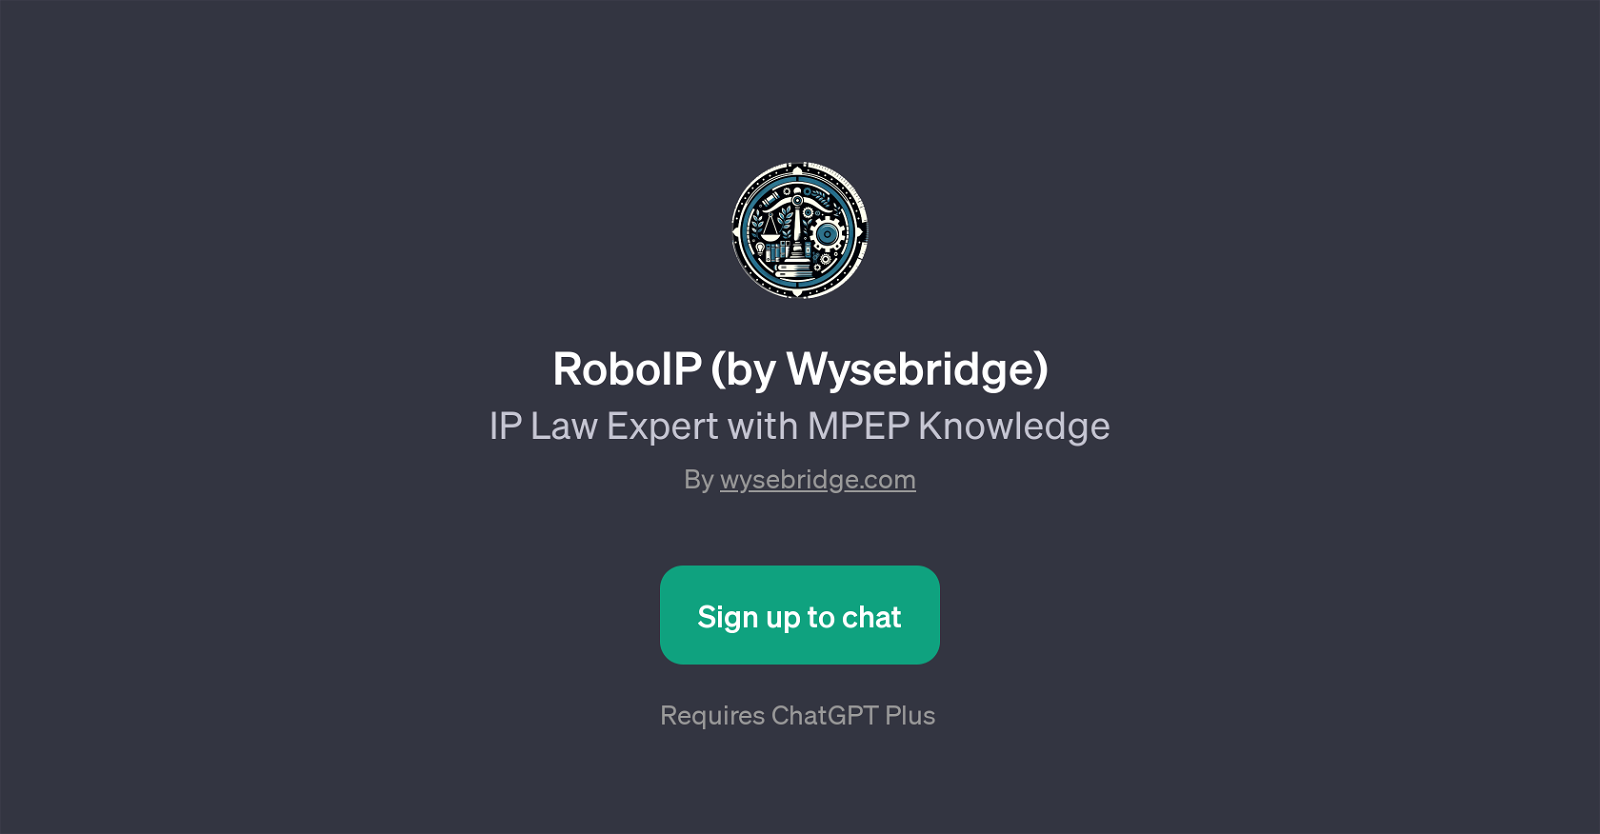 RoboIP (by Wysebridge) website